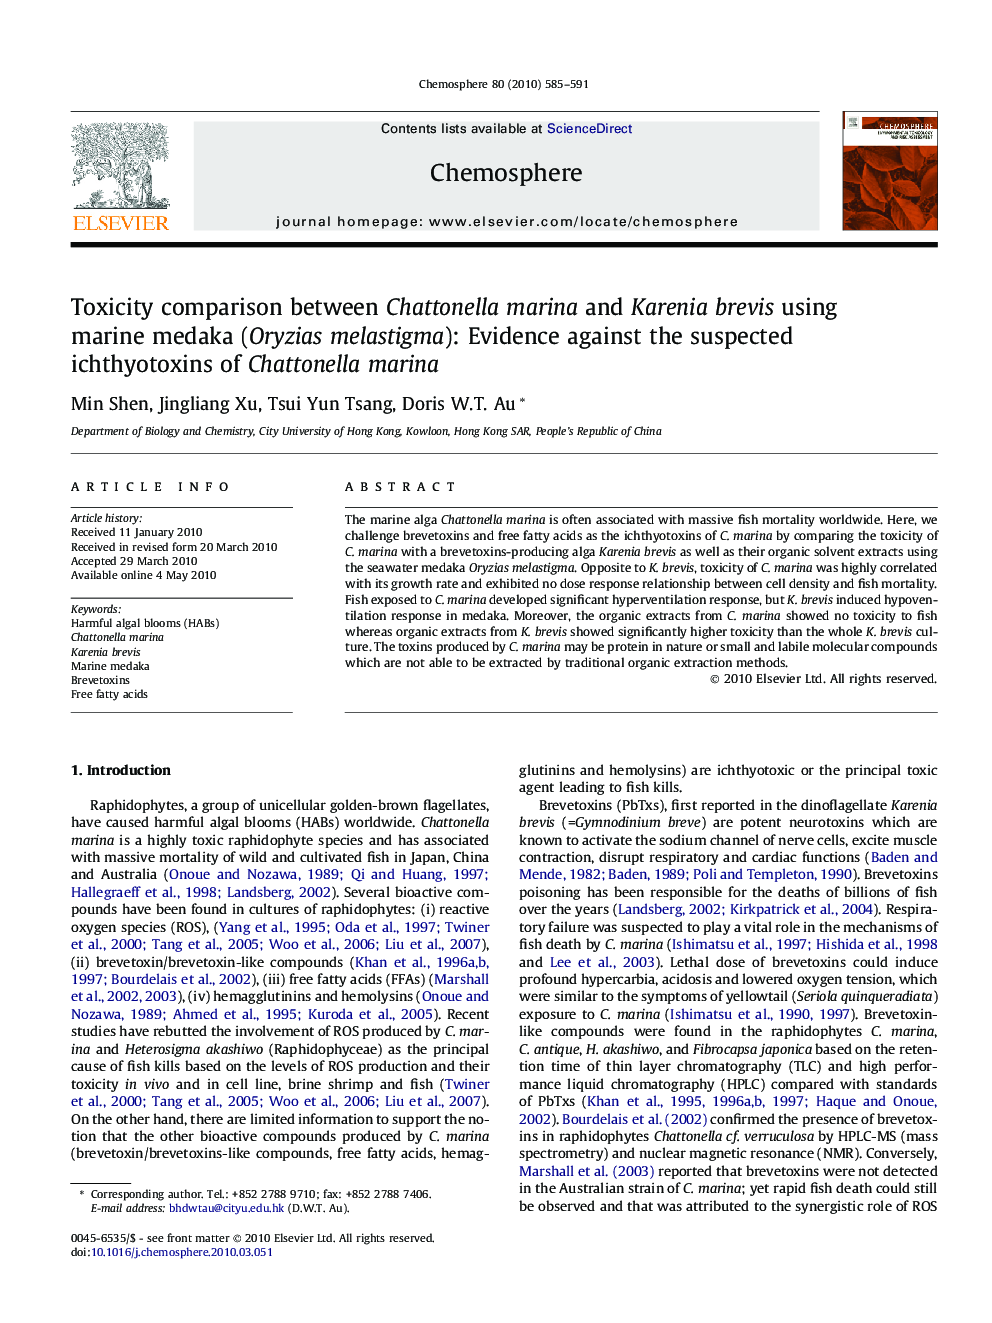 Toxicity comparison between Chattonella marina and Karenia brevis using marine medaka (Oryzias melastigma): Evidence against the suspected ichthyotoxins of Chattonella marina